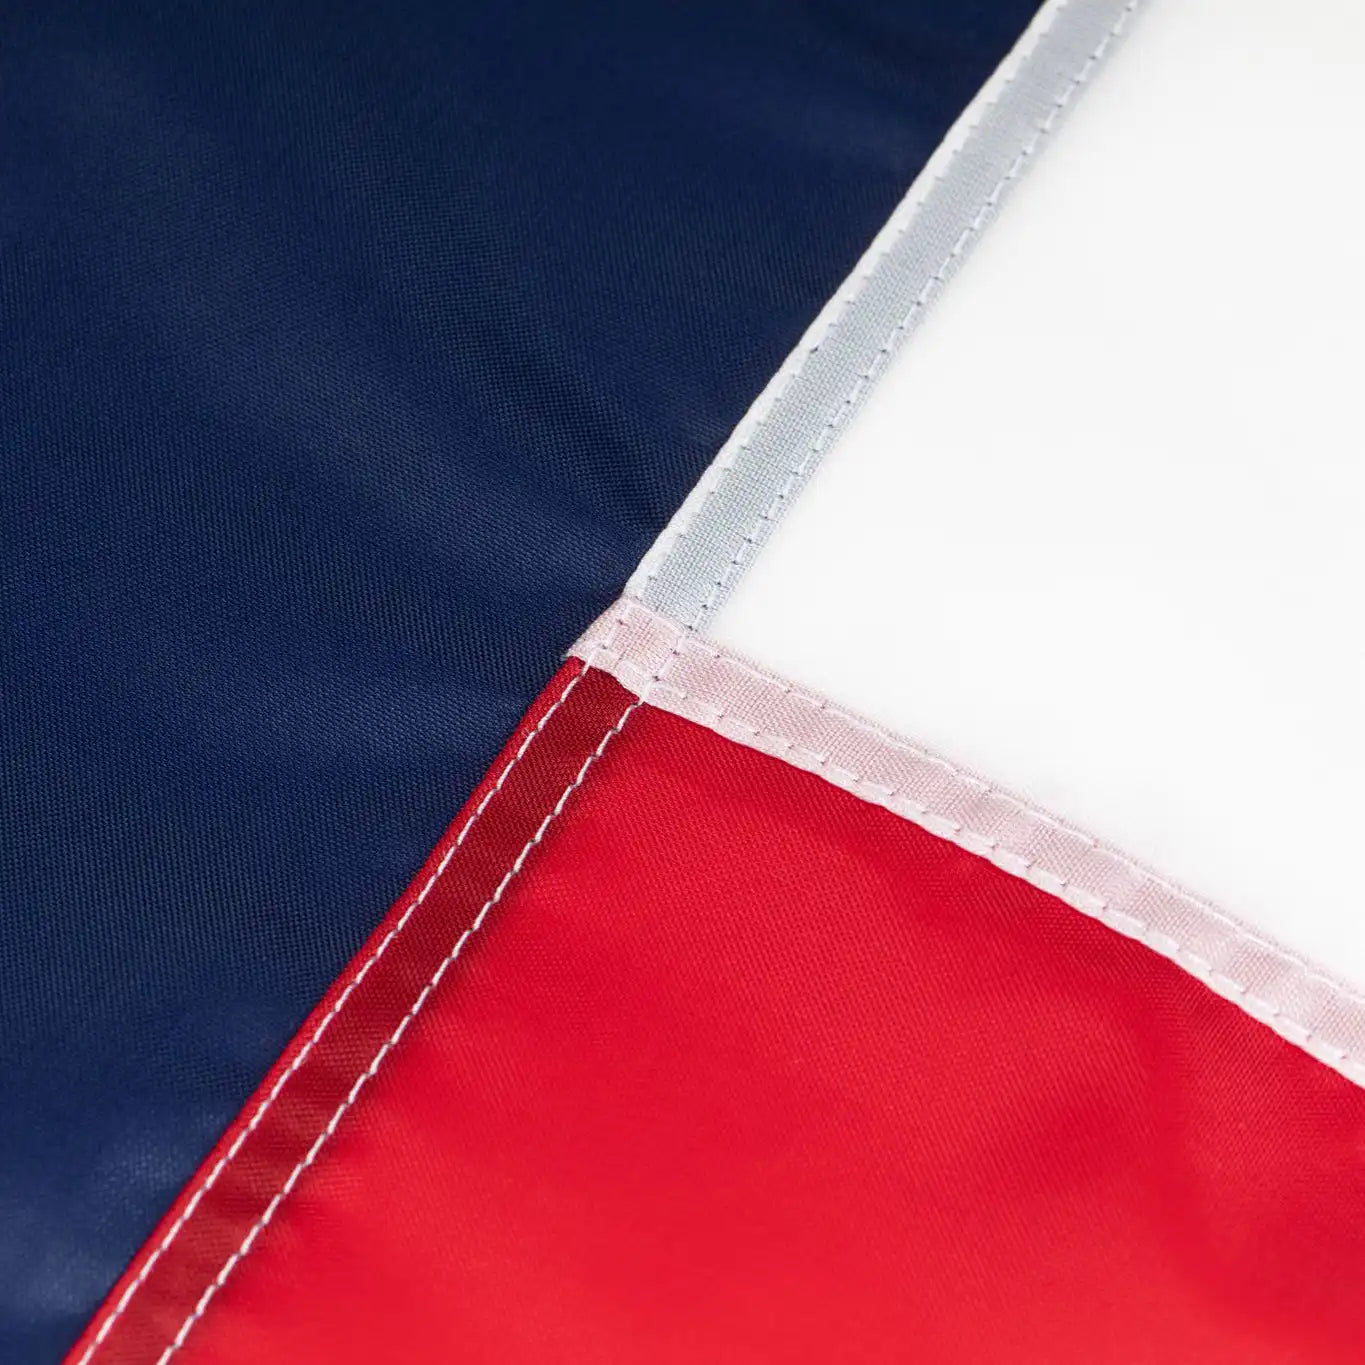 Detail of Texas Flag